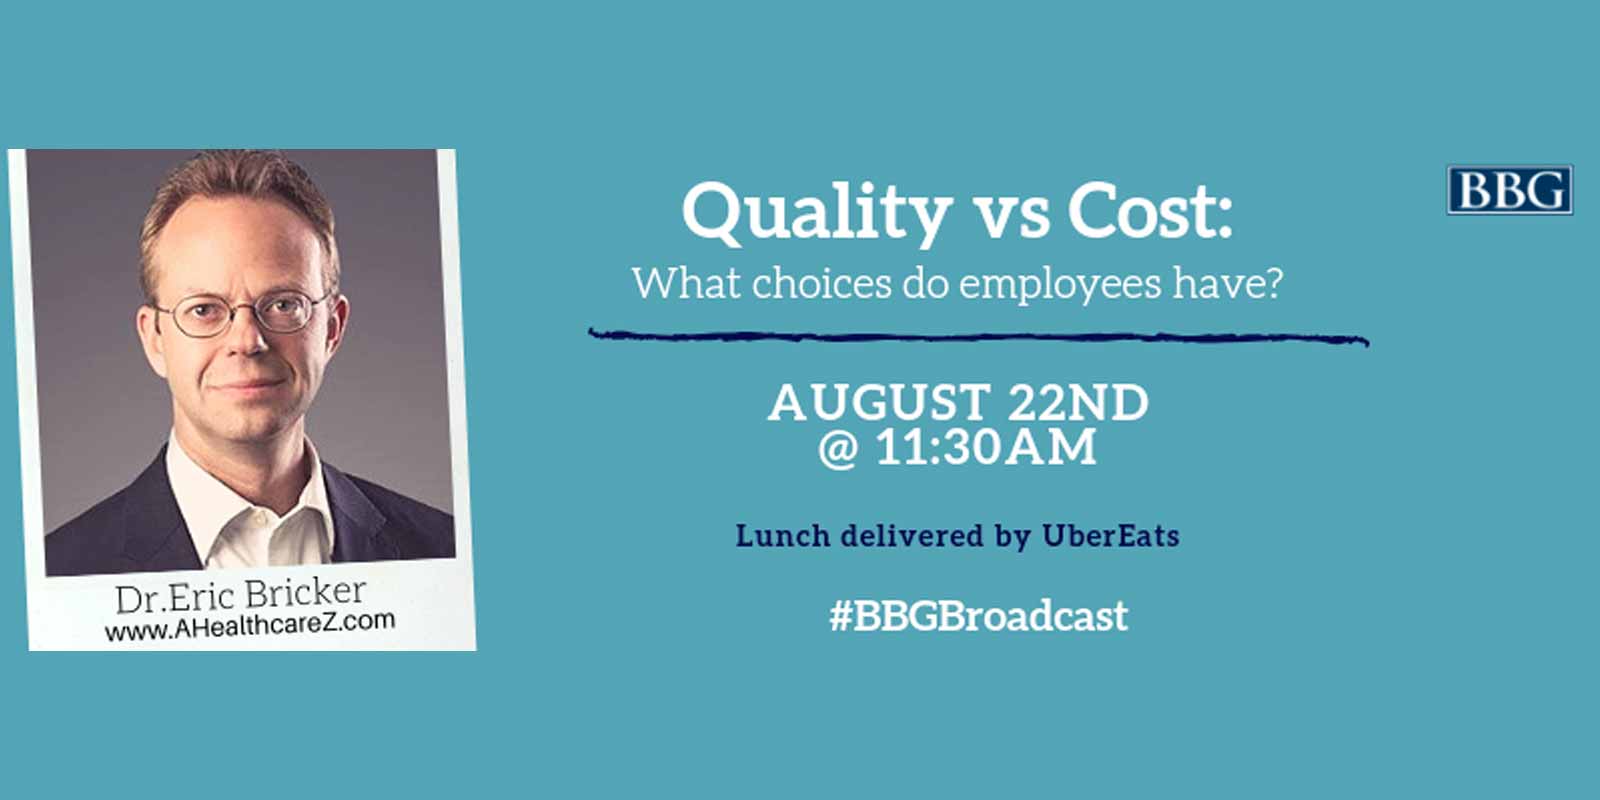 bbg-quality-vs-cost-webinar-banner